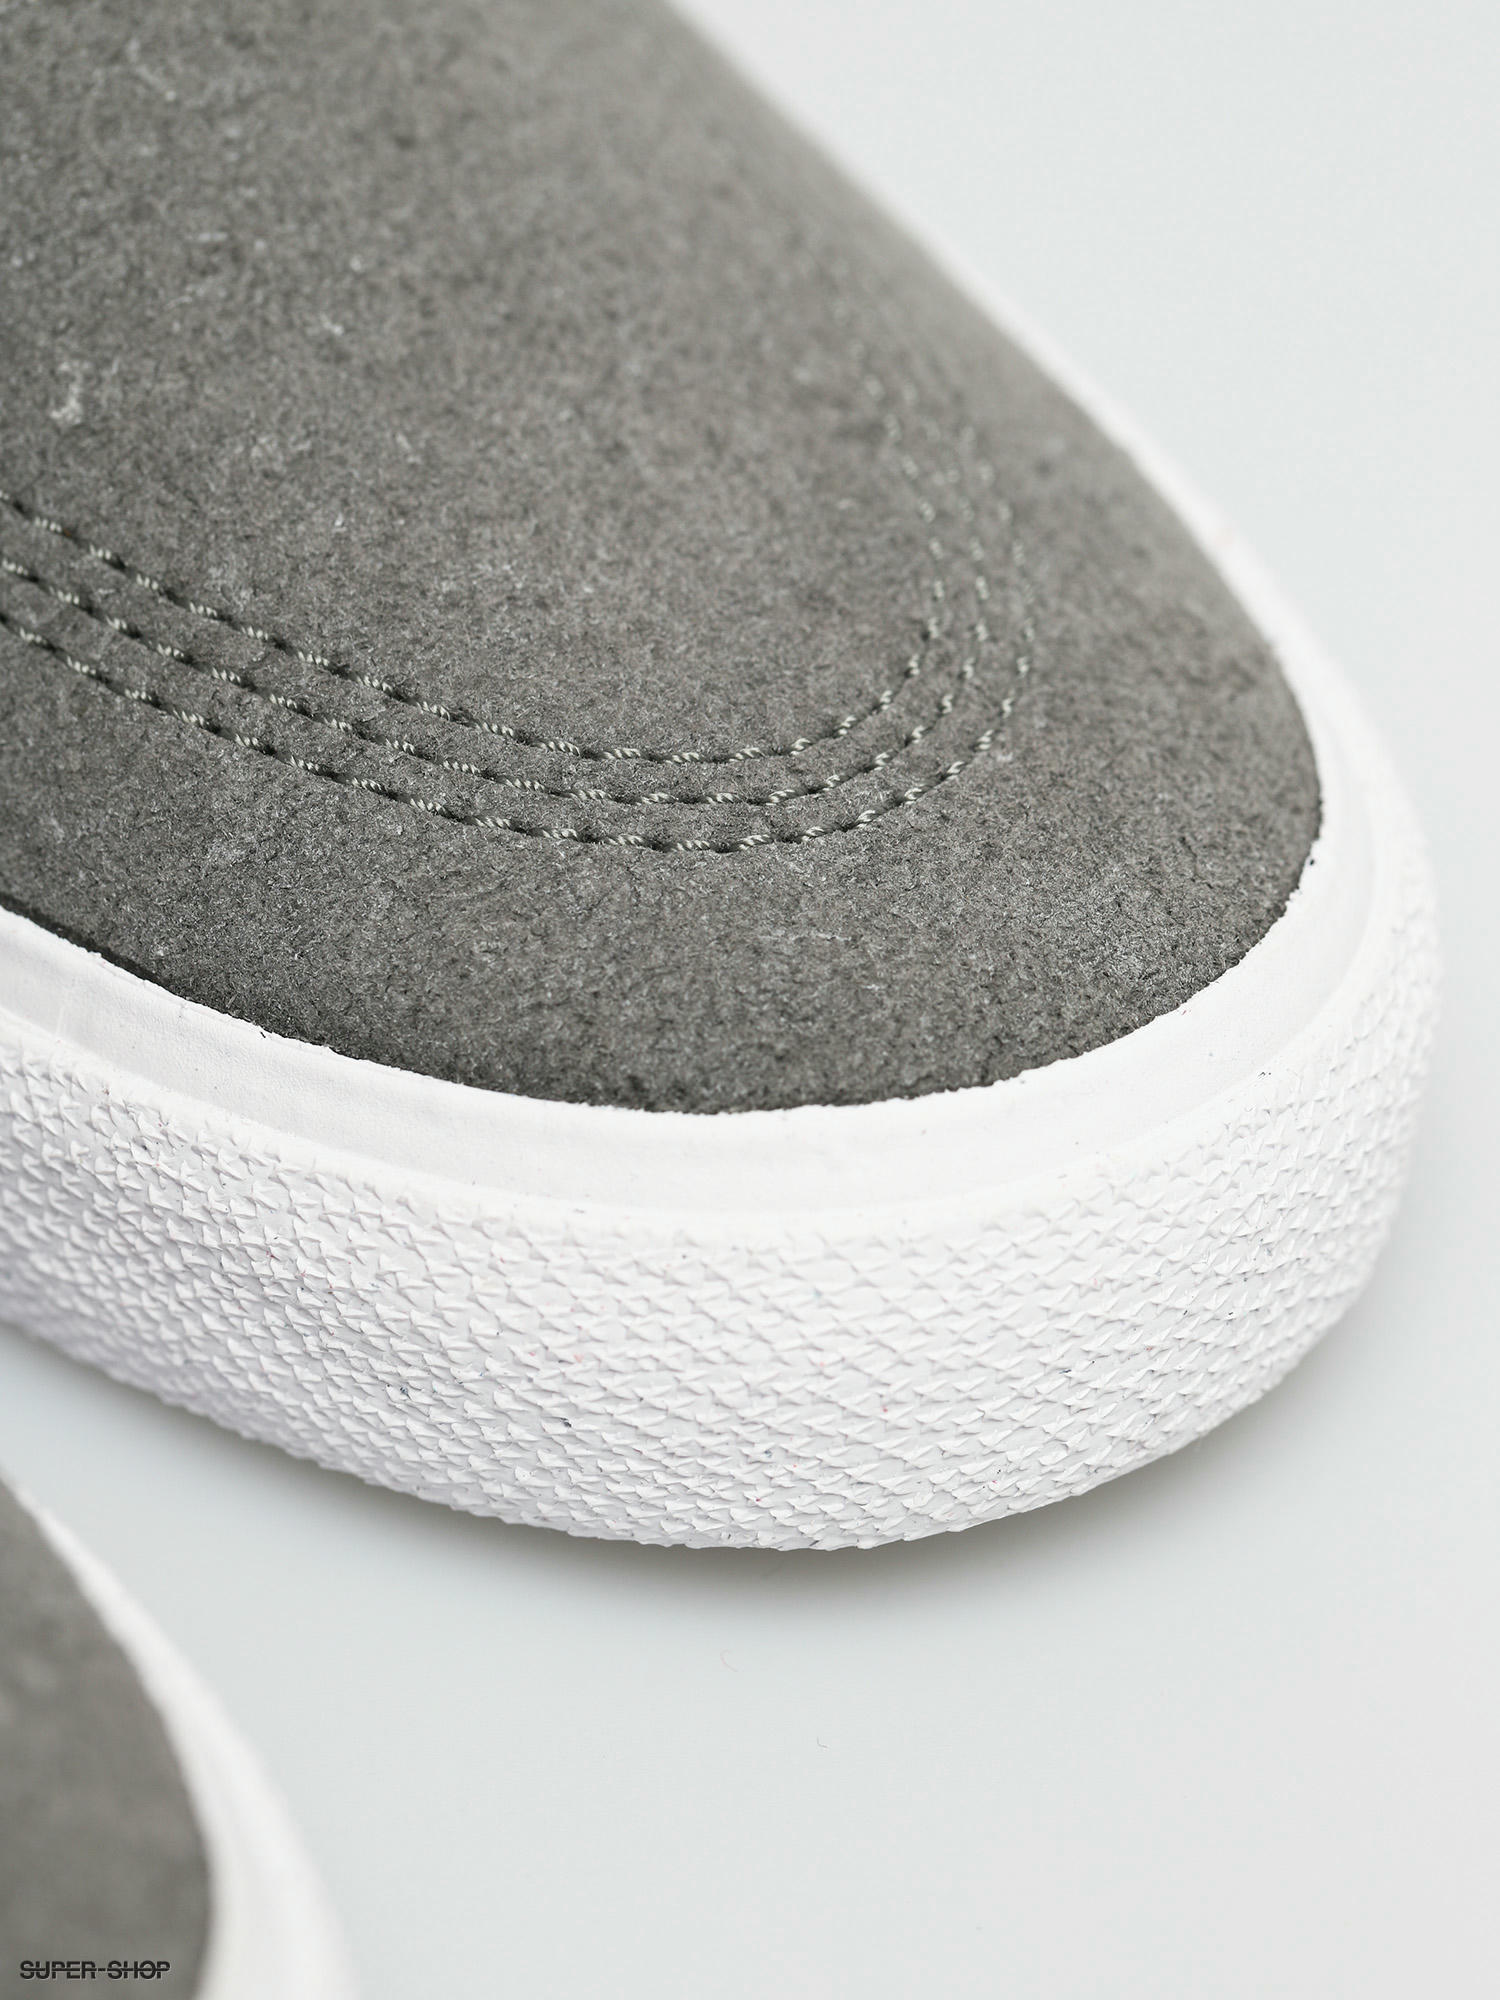 Nike Sb Zoom Stefan Janoski Fl Rm Shoes Tumbled Grey White Tumbled Grey White